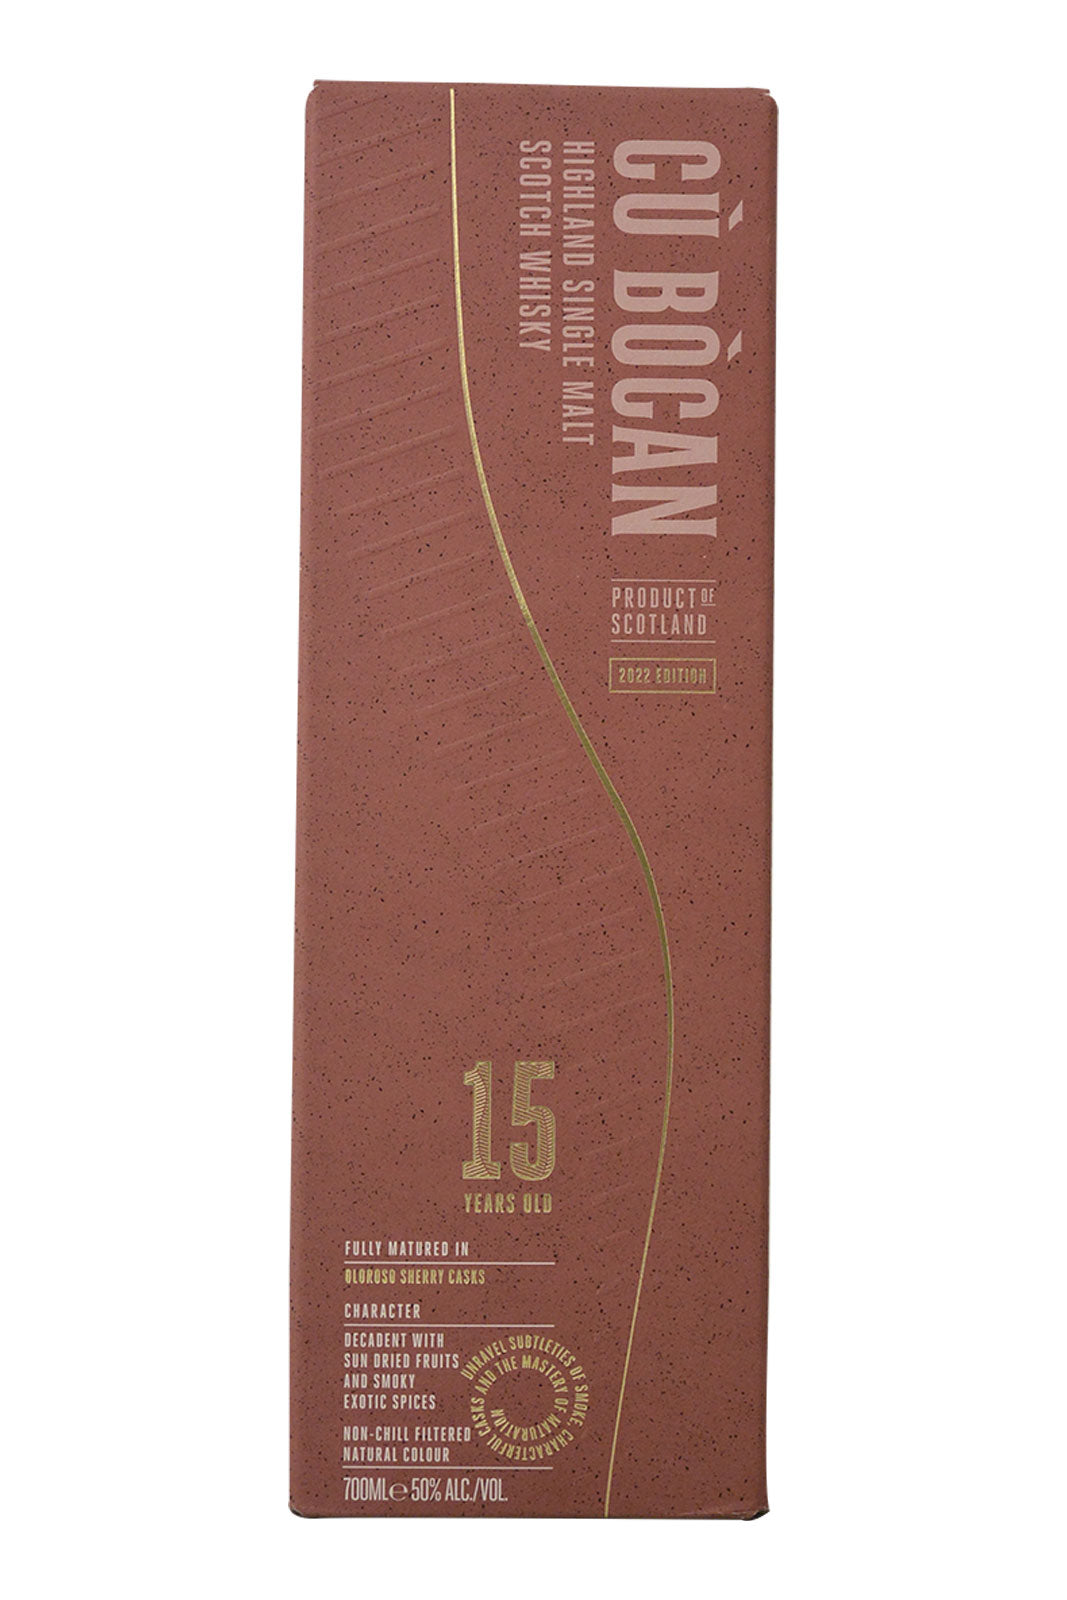 Tomatin Cu Bocan 15 Jahre Oloroso Sherry Cask Whisky 2022 Edition